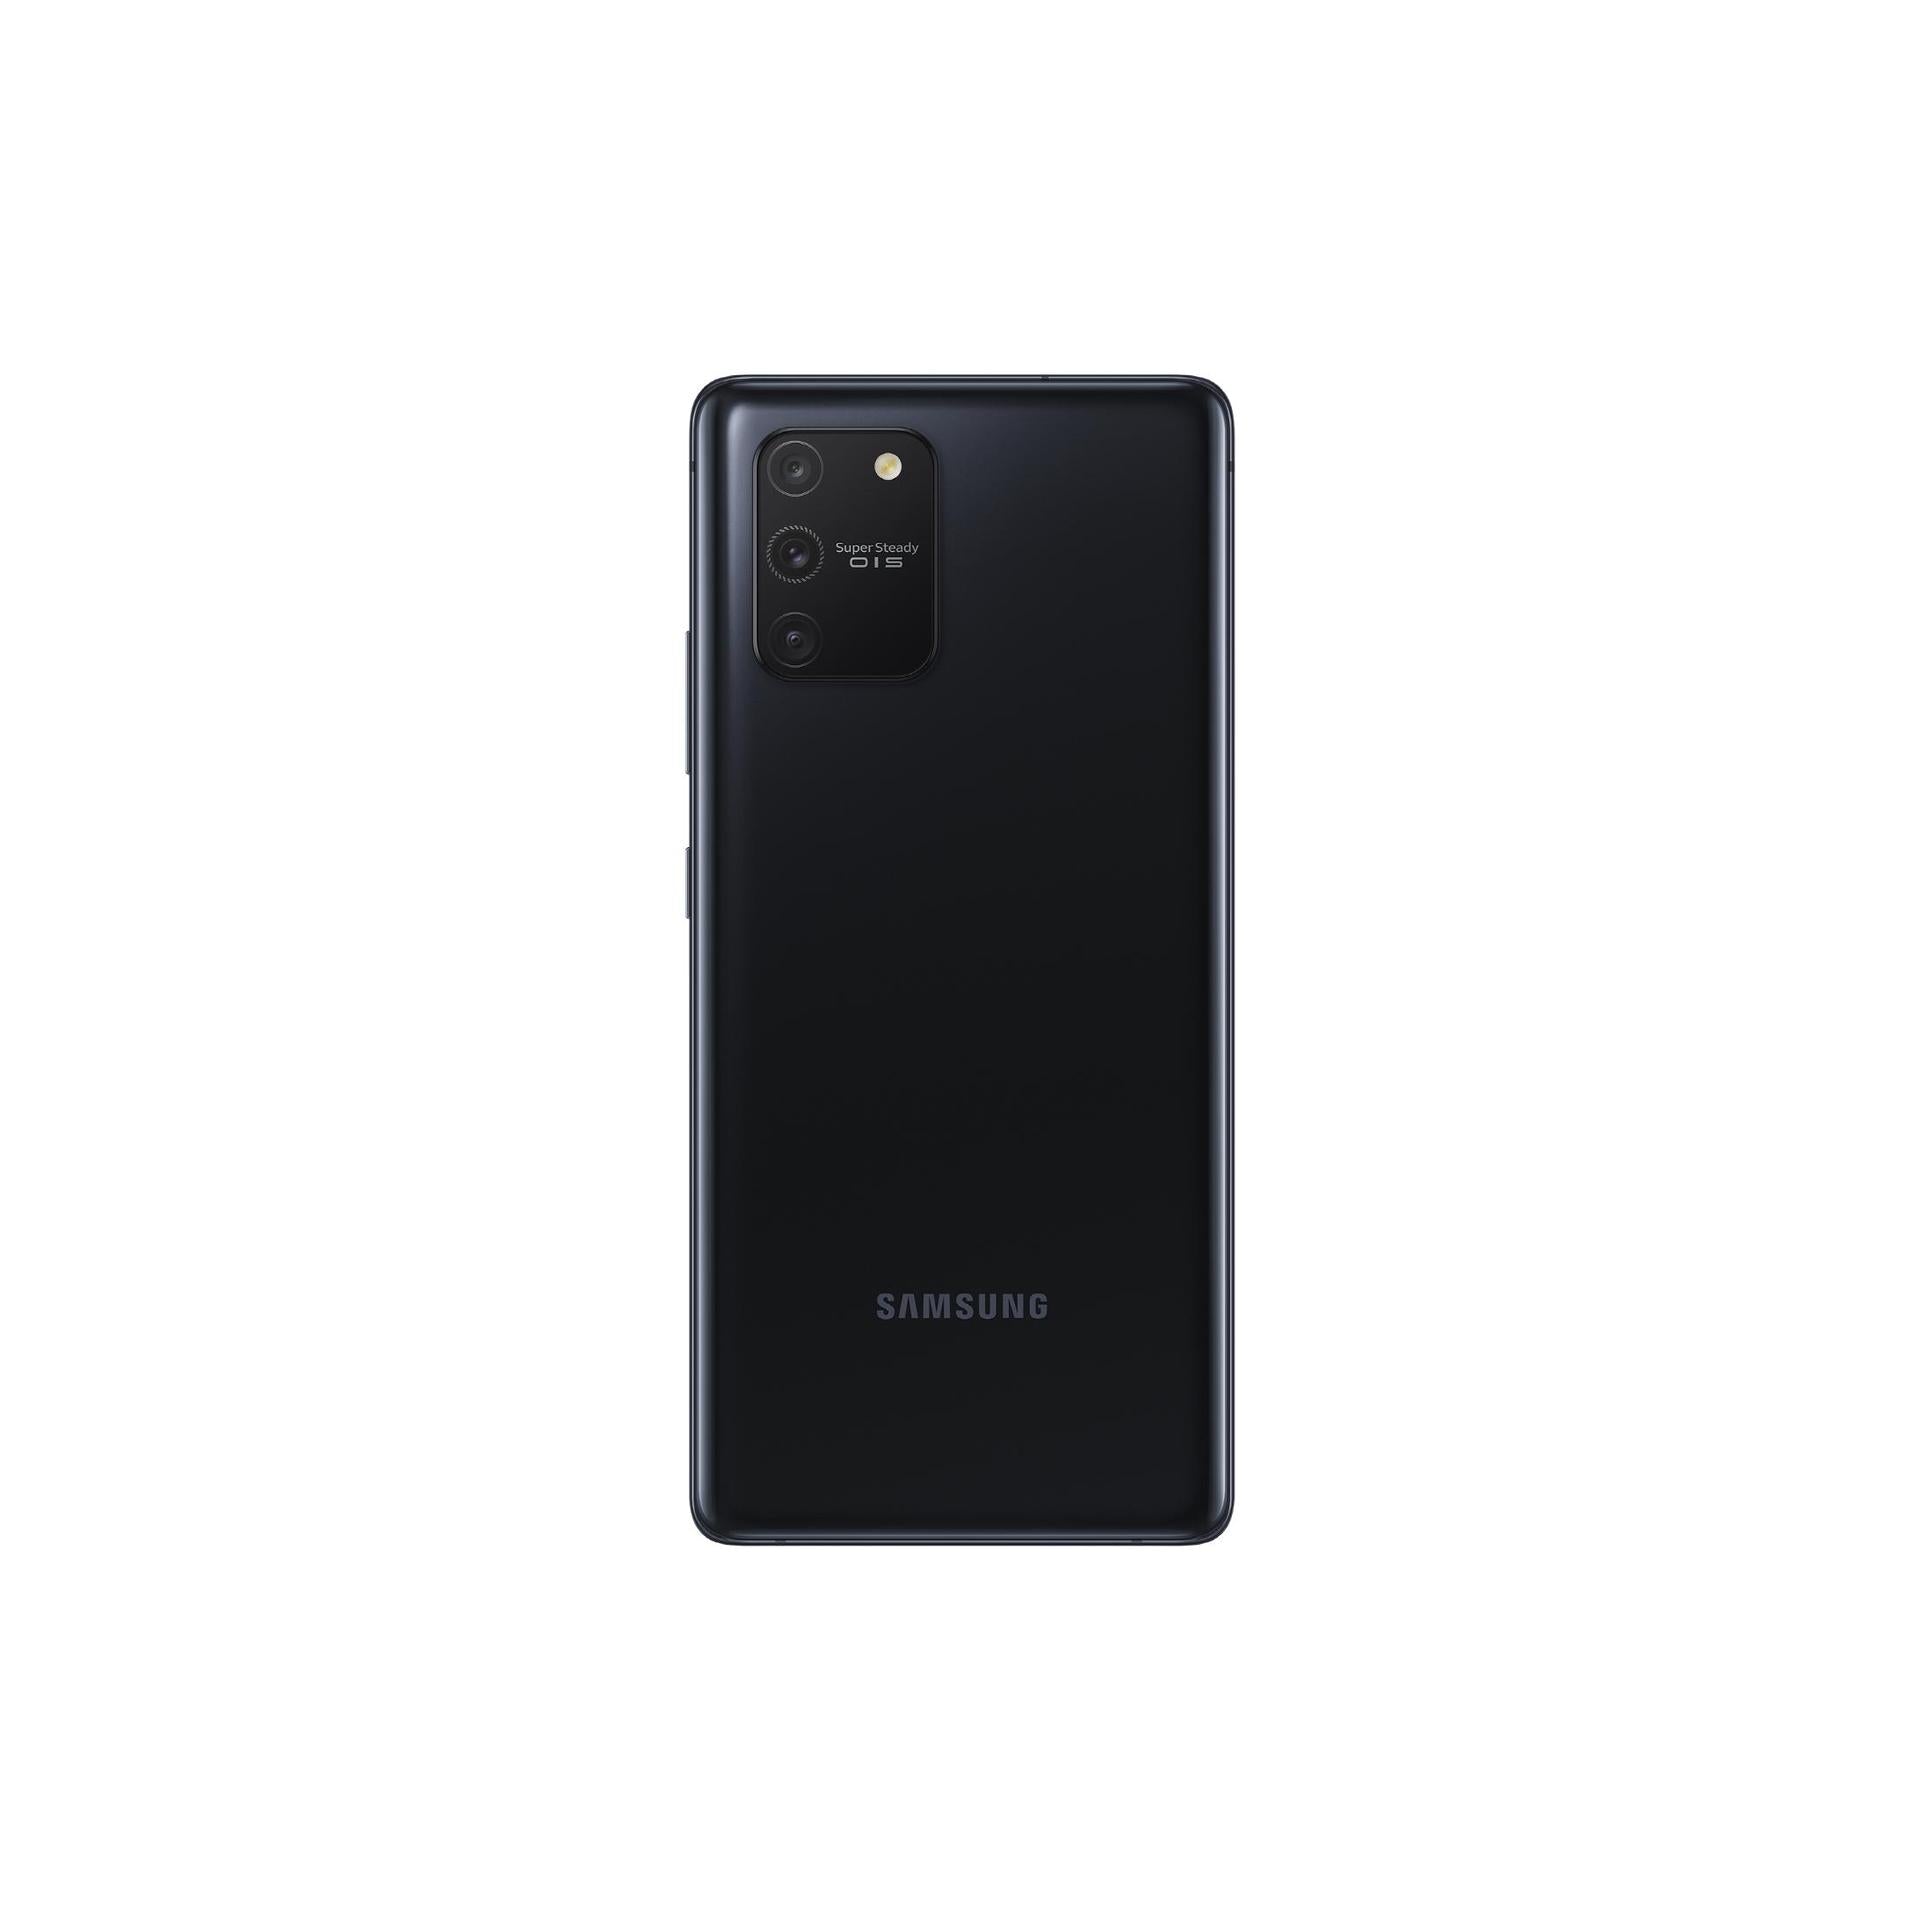 Samsung Galaxy S10 Lite, 128GB, Prism Black, Unlocked - Fair Condition